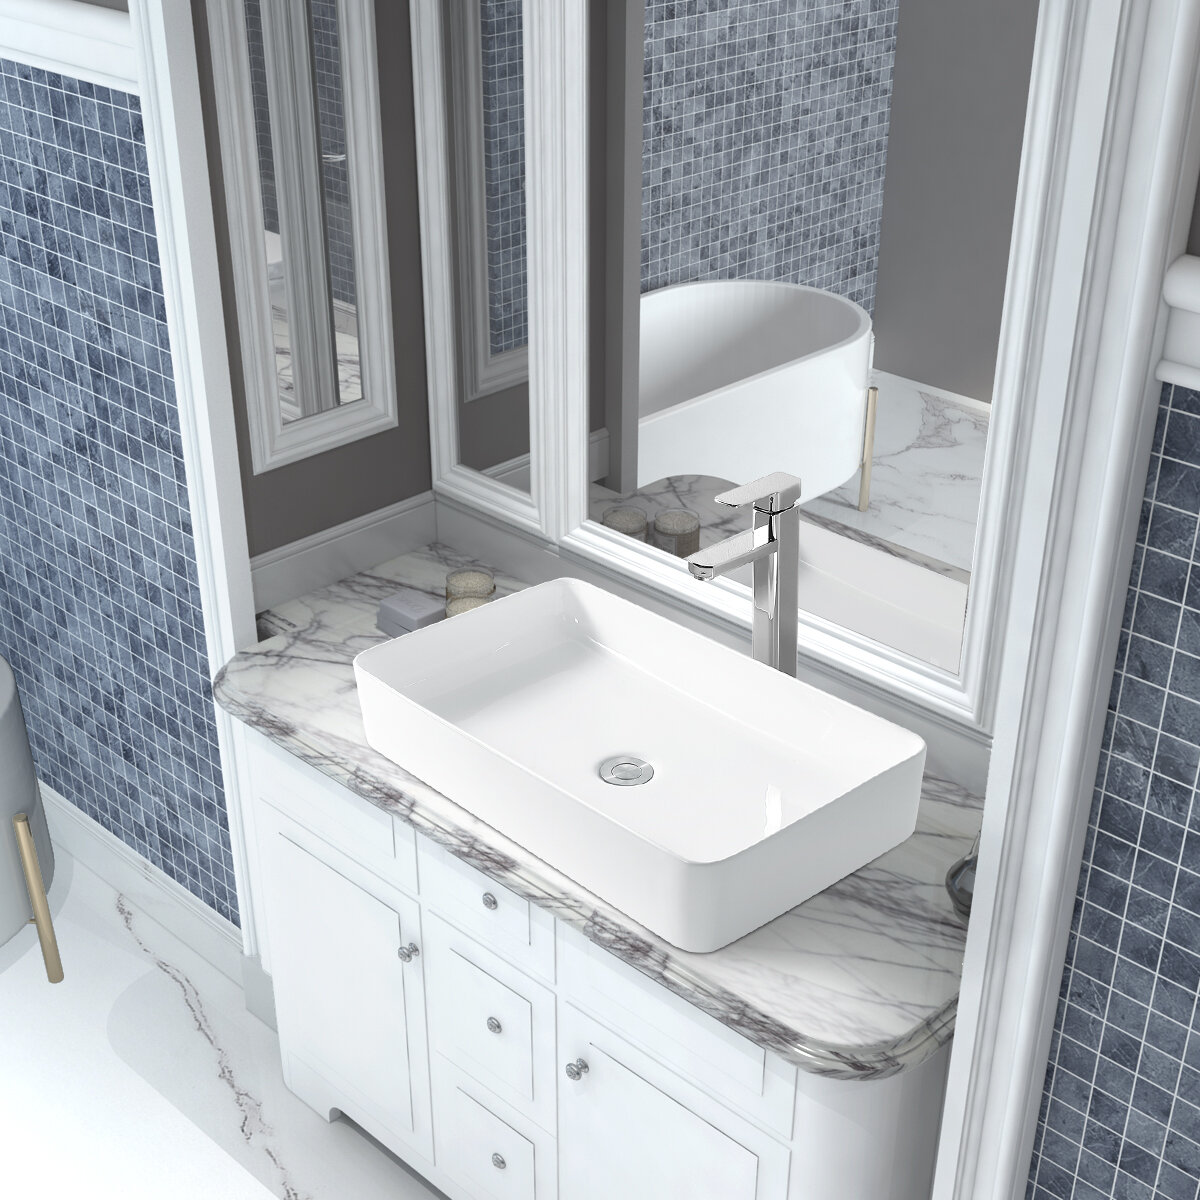 Sinber 24x14 Rectangle Ceramic Bathroom Vanity Vessel Sink Above Counter Basin Reviews Wayfairca